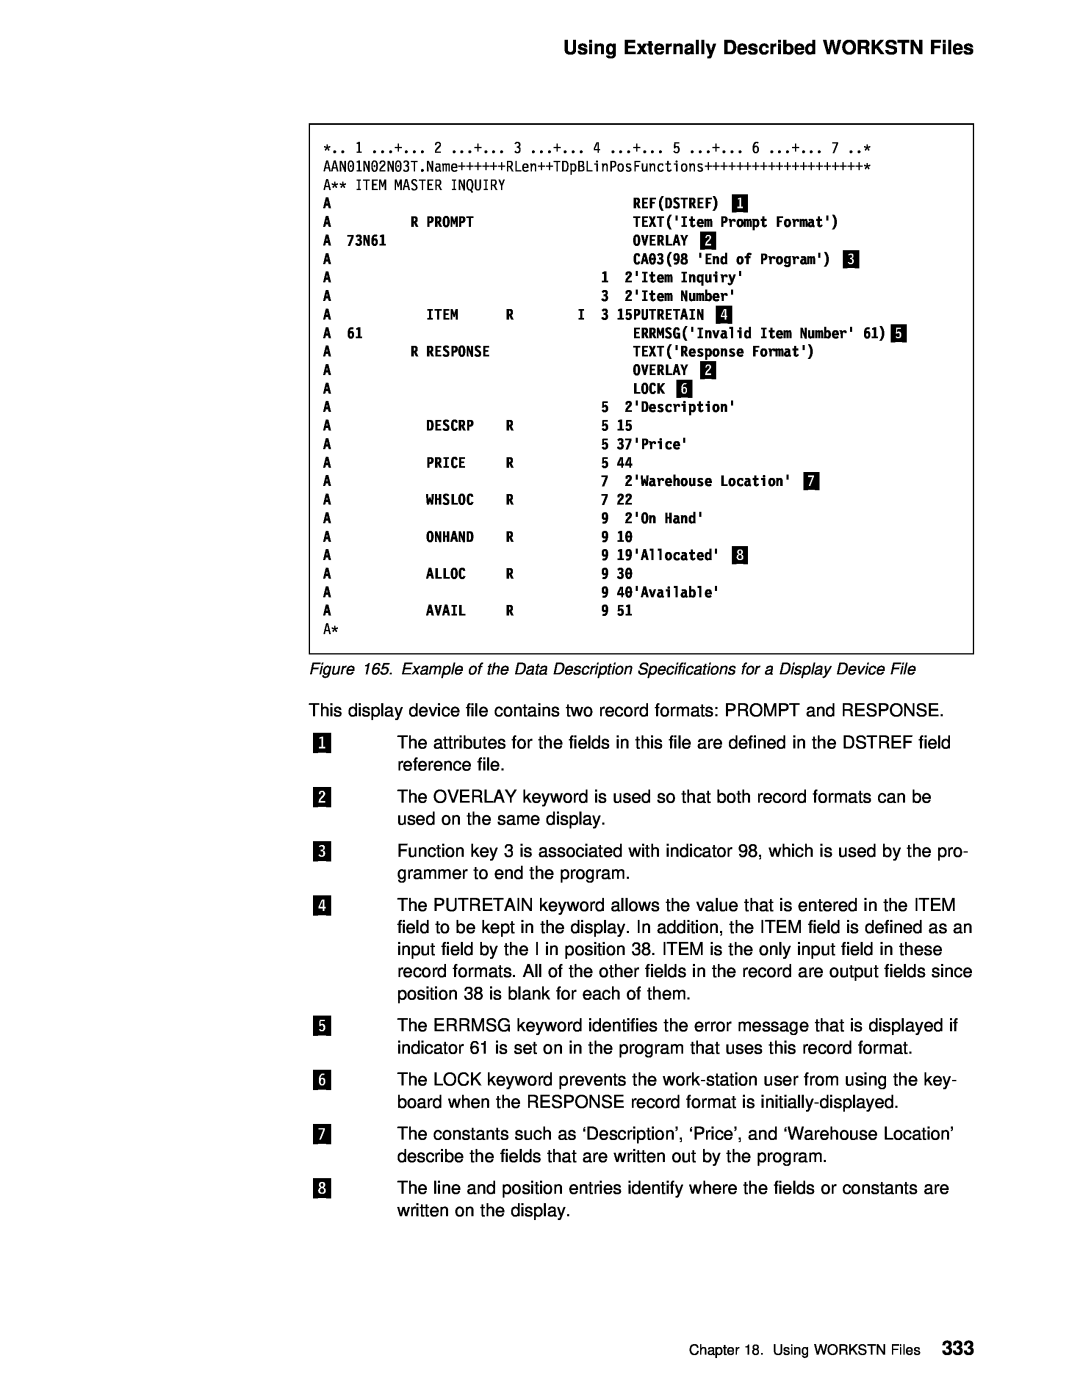 IBM AS/400 manual Using Externally Described WORKSTN Files, R Response, Using WORKSTN Files333 